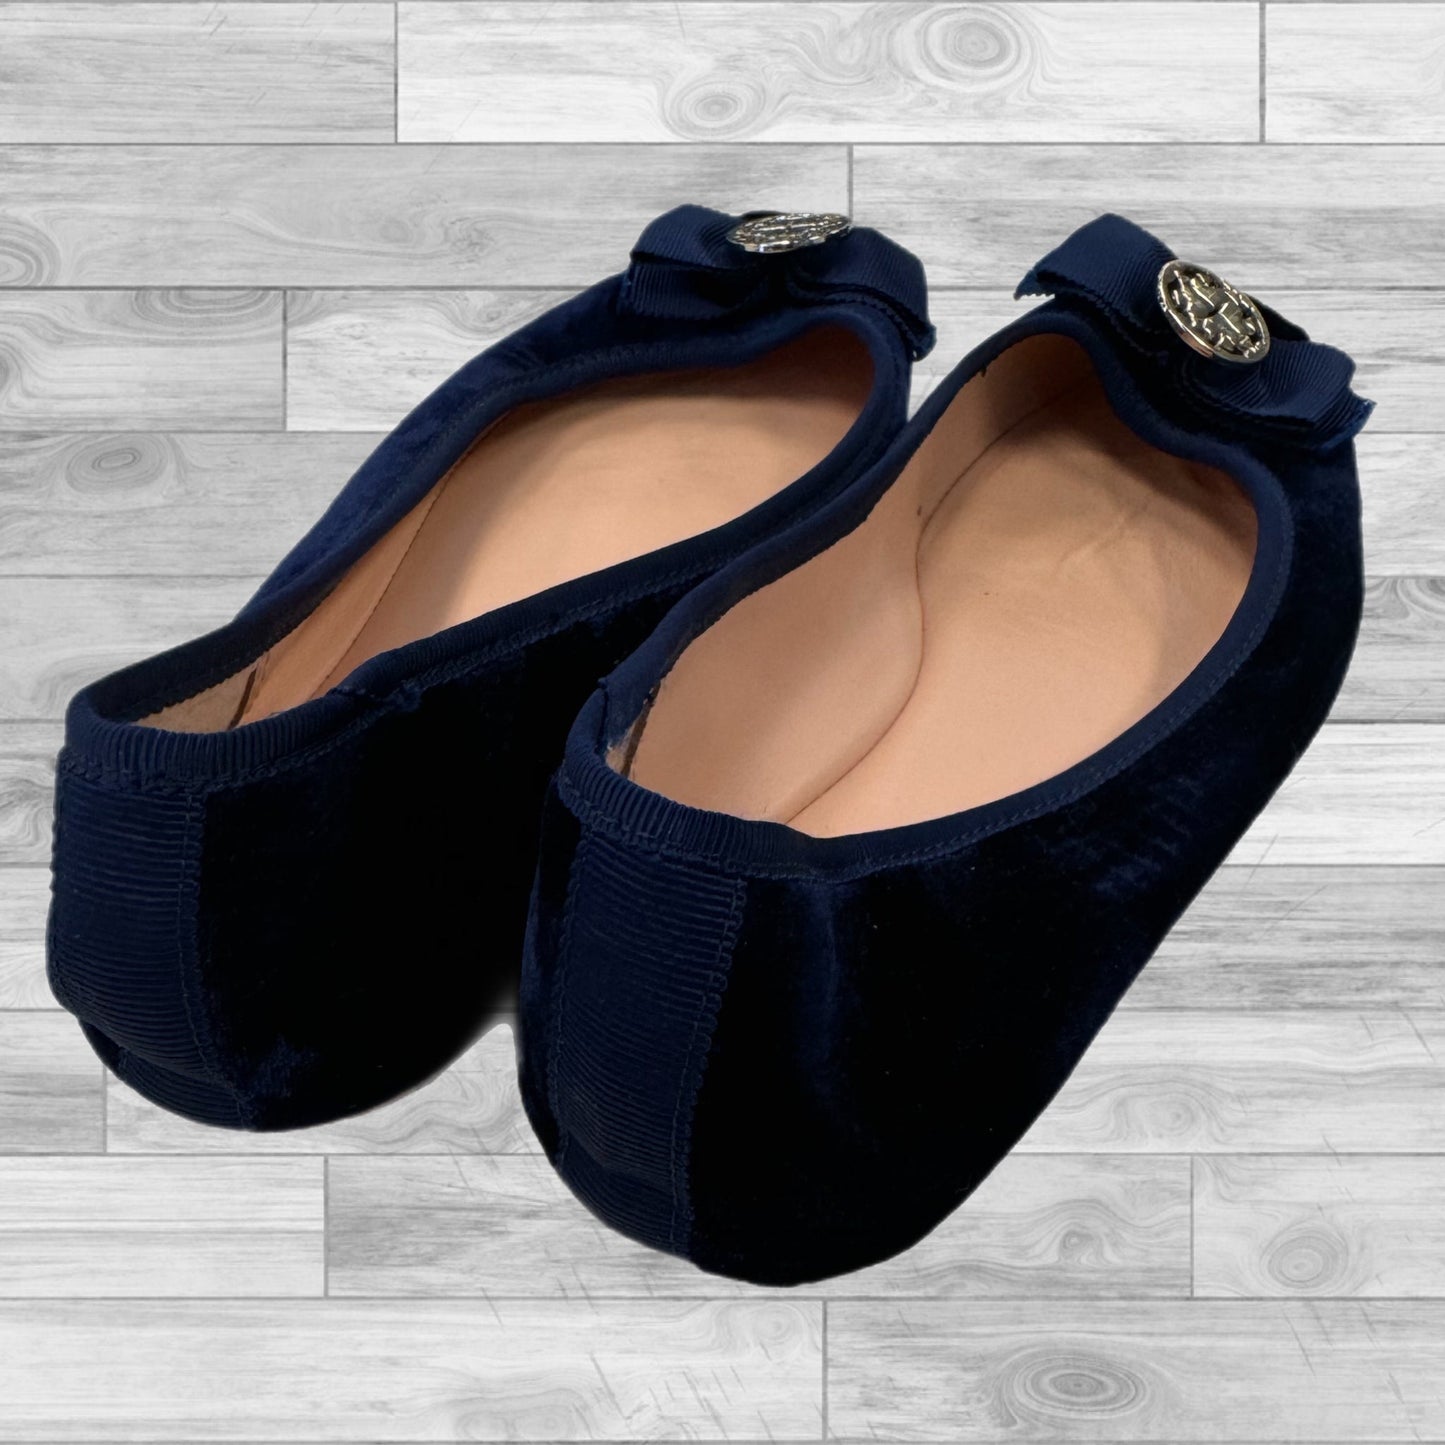 Blue Shoes Flats Kate Spade, Size 7.5